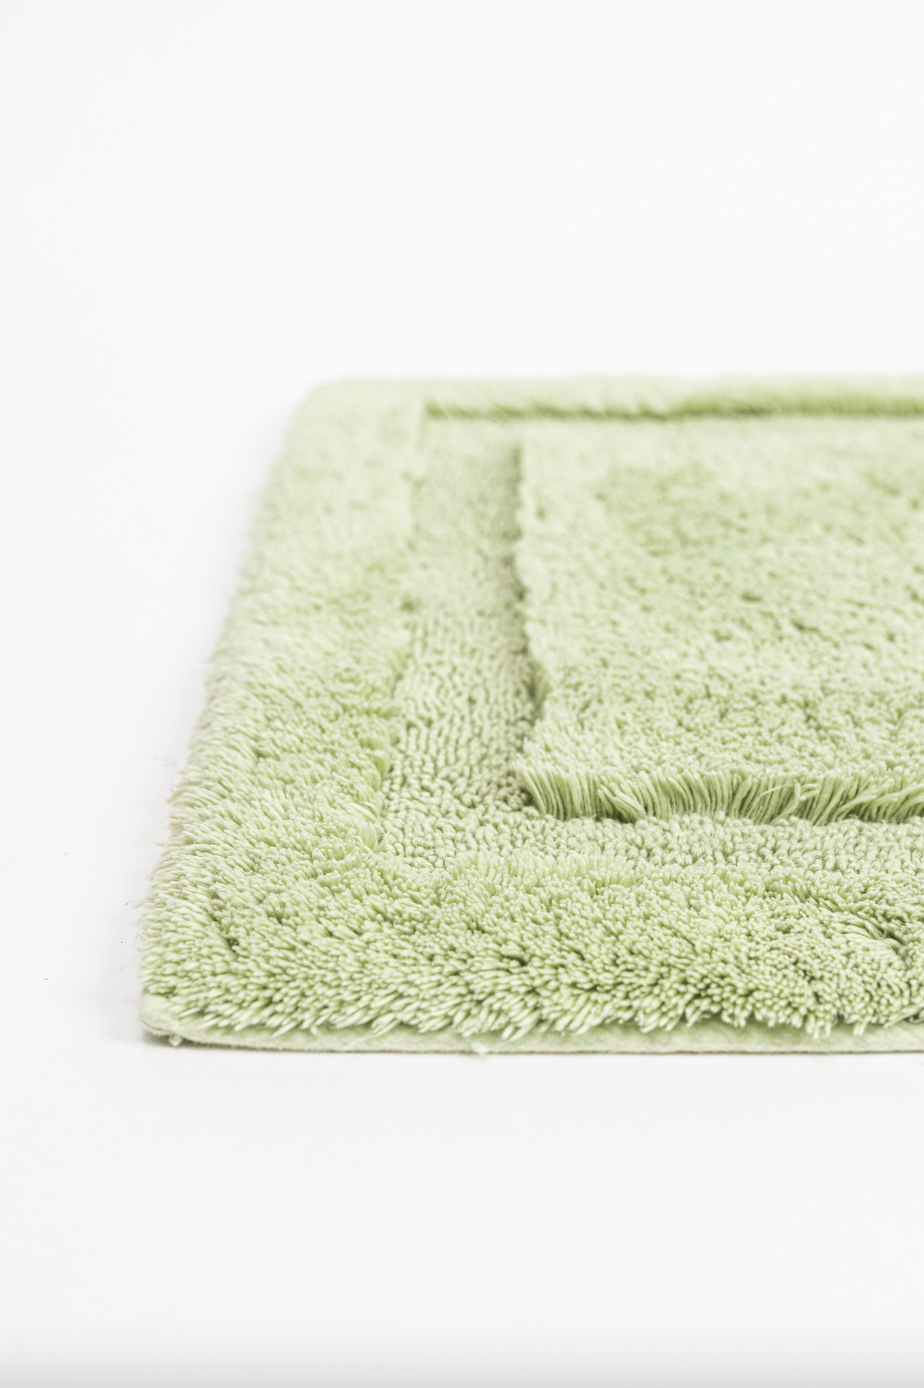 Luxury Tender Green Floor Carpet For Bedroom Solid Bathroom Carpet